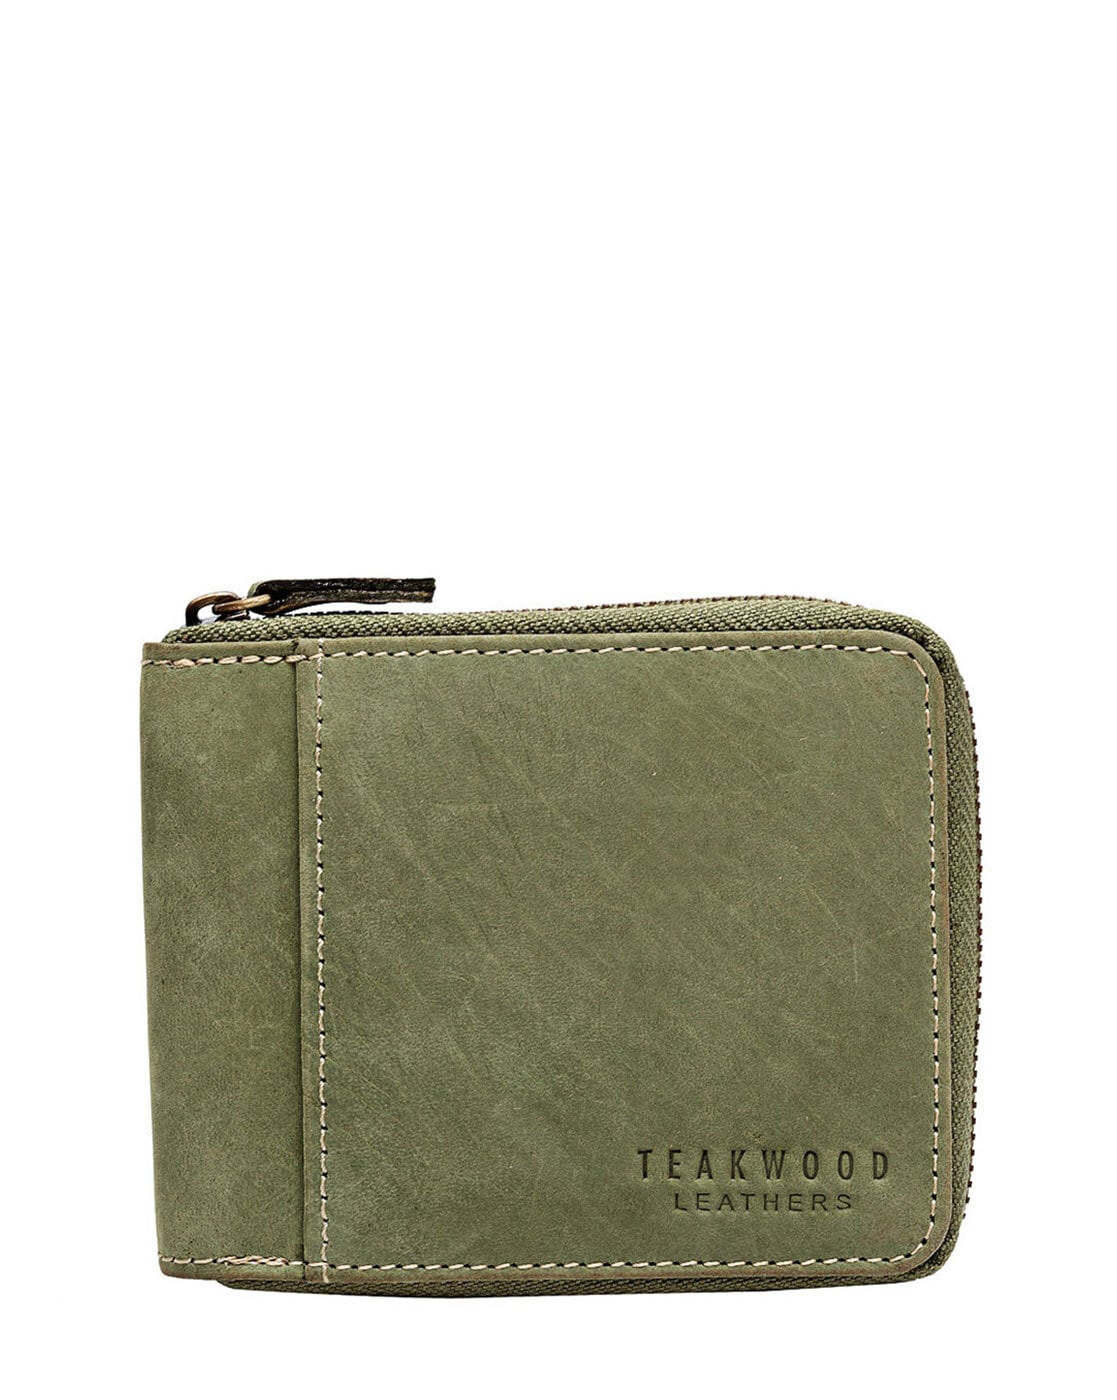 Buy TEAKWOOD LEATHERS Bi-Folds Wallet with Branding